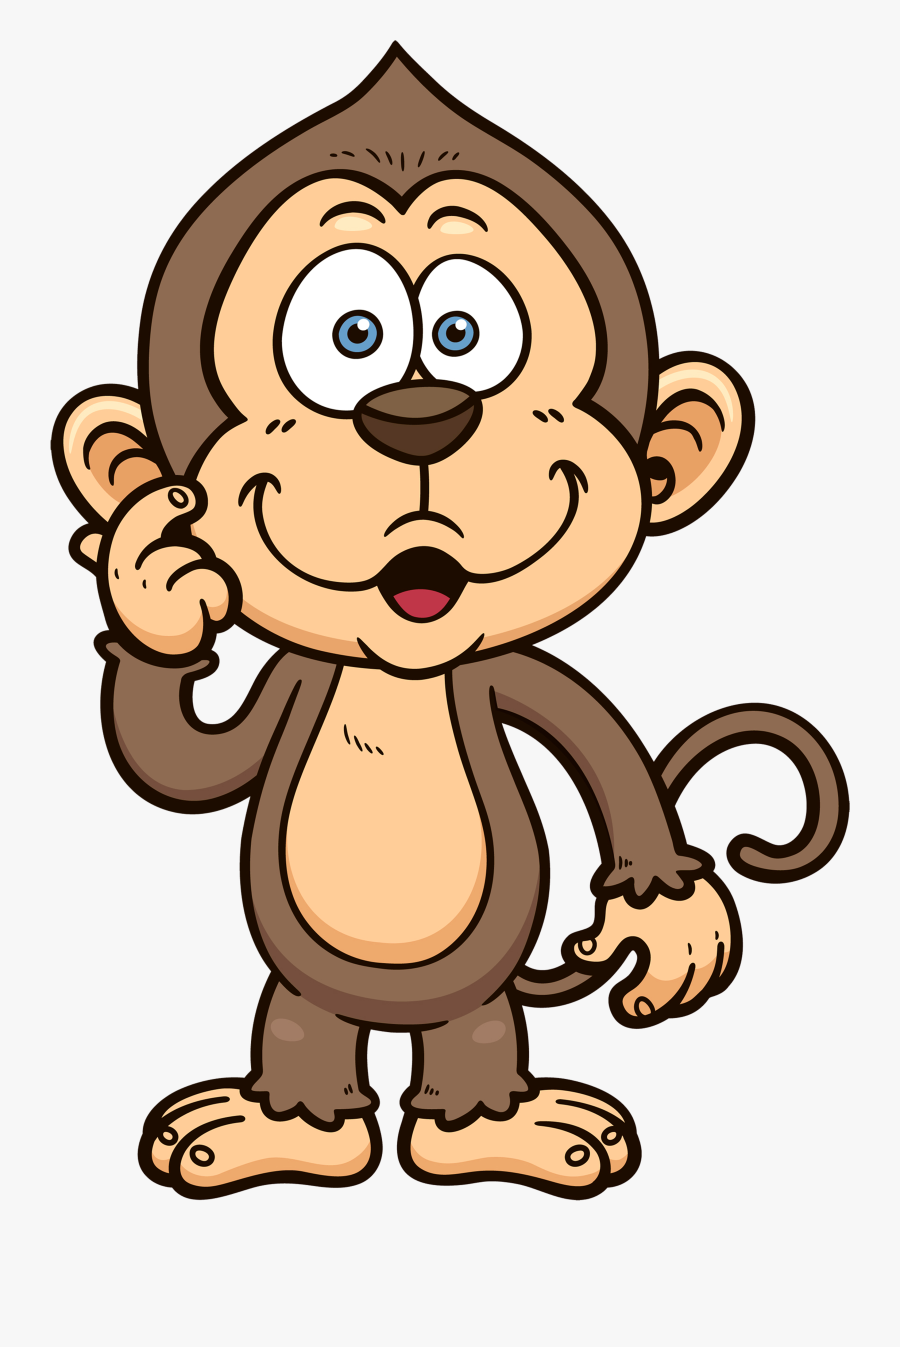 Monkey Cartoons Image - Monkey Cartoon Transparent Background, Transparent Clipart